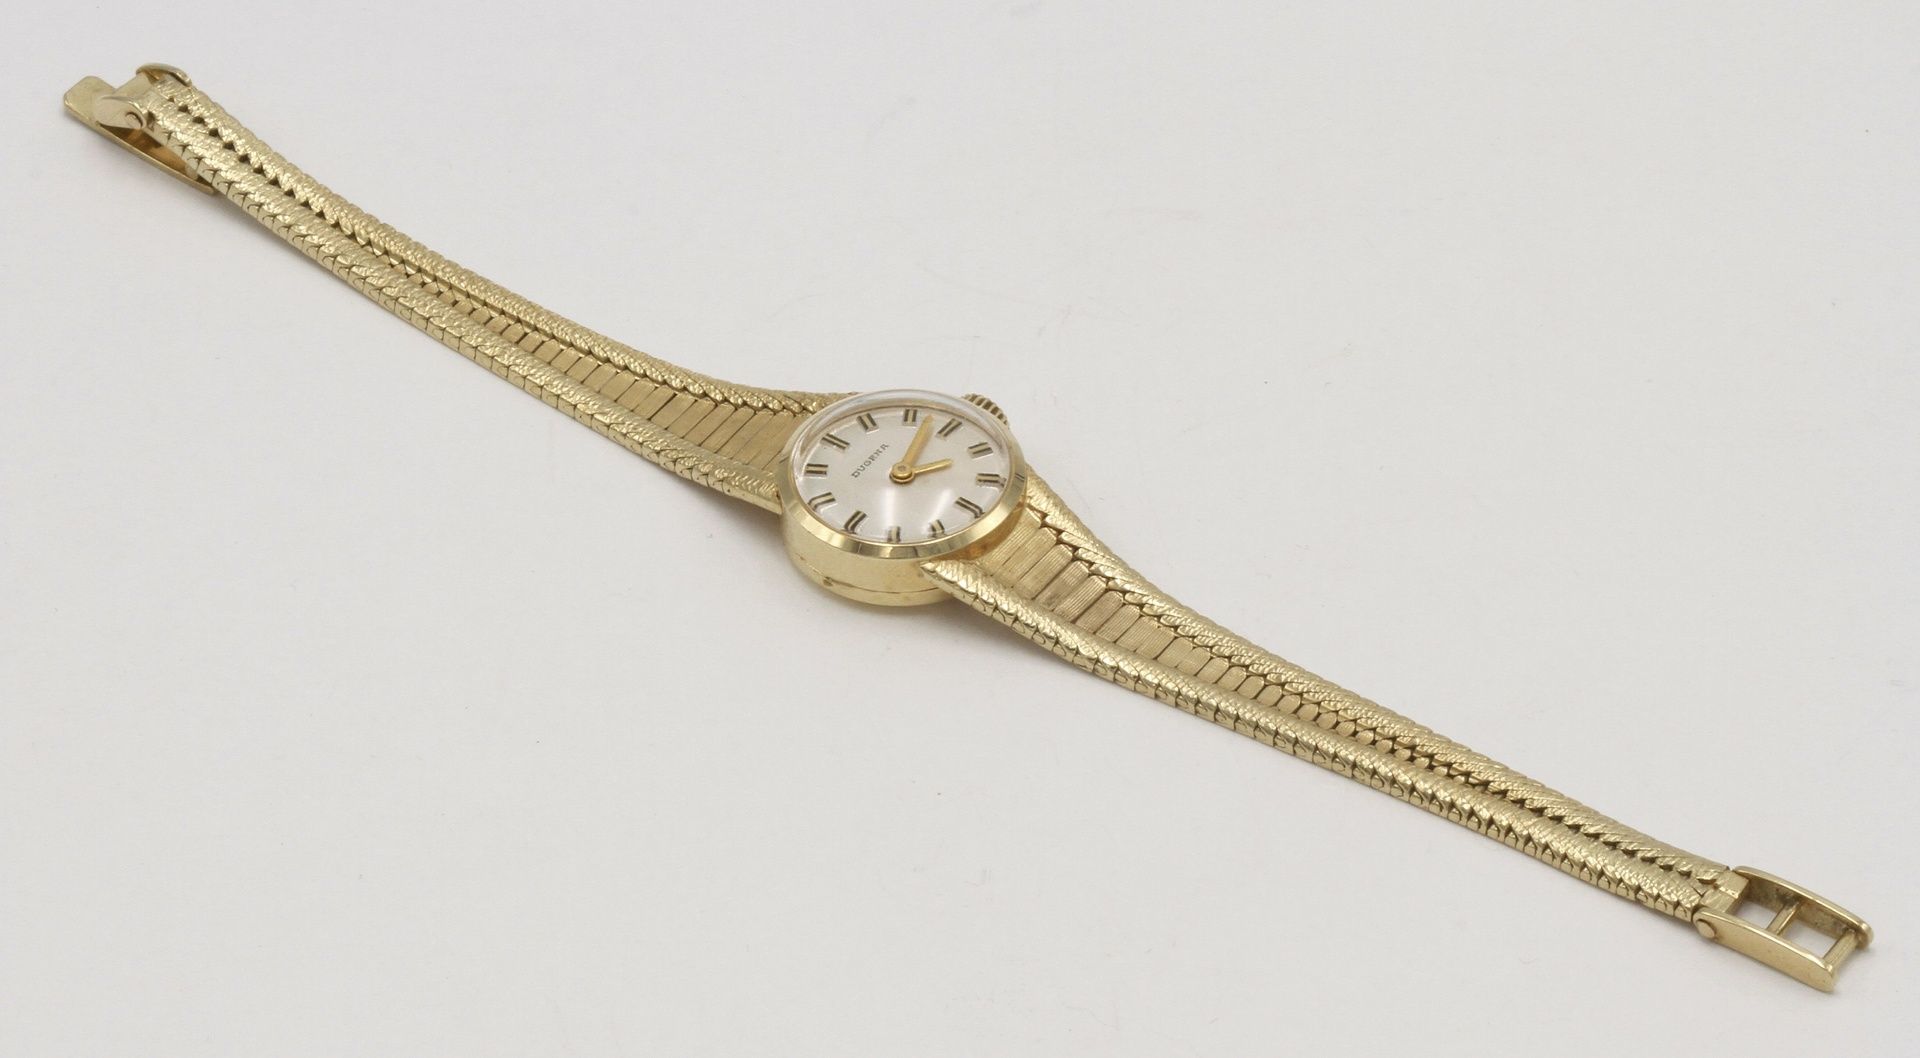 Dugena DamenarmbanduhrArmband und Gehäuse 585/- Gelbgold, 17 Juwelen, Dugena 2130 Uhrwerk - Image 4 of 4